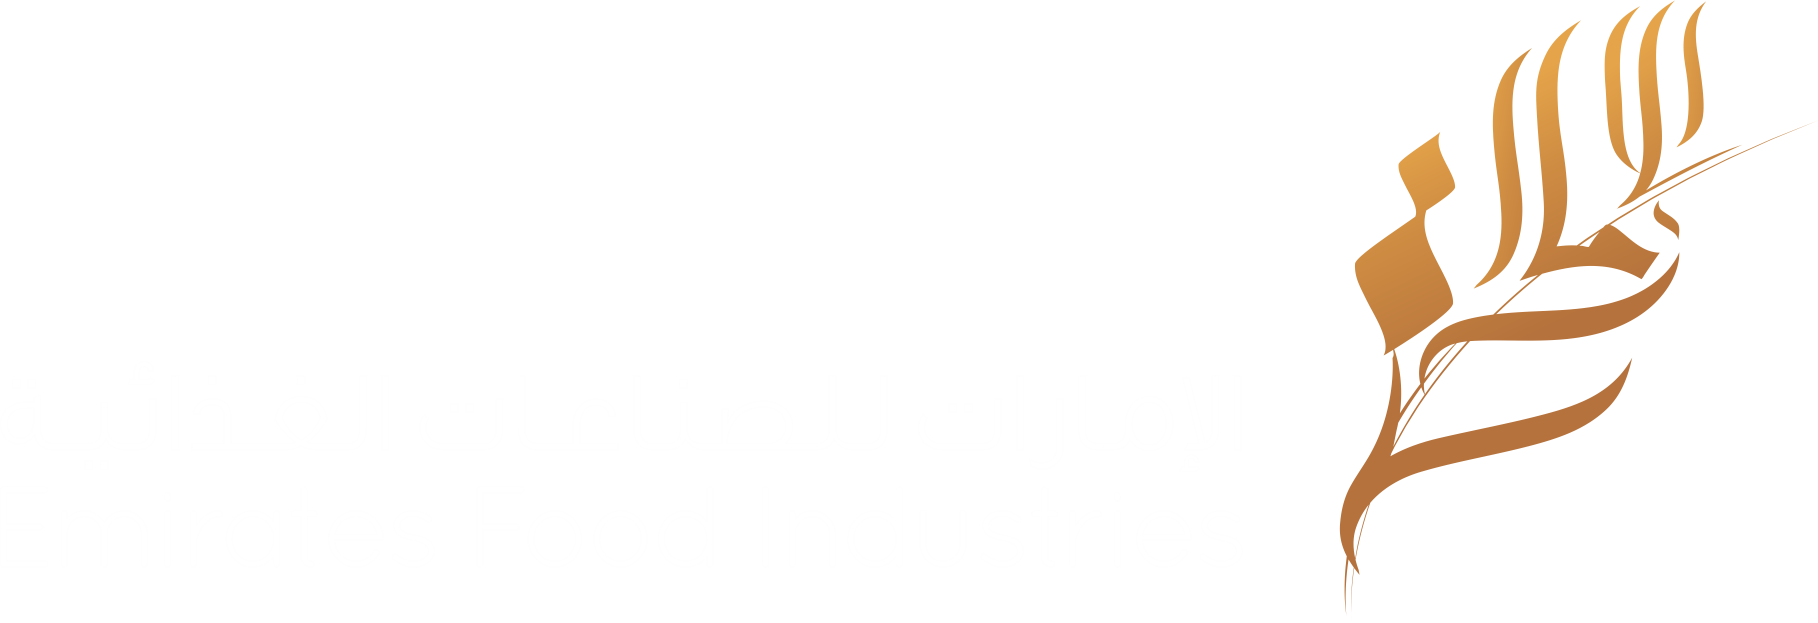 Emirates National Food Co. LLC.